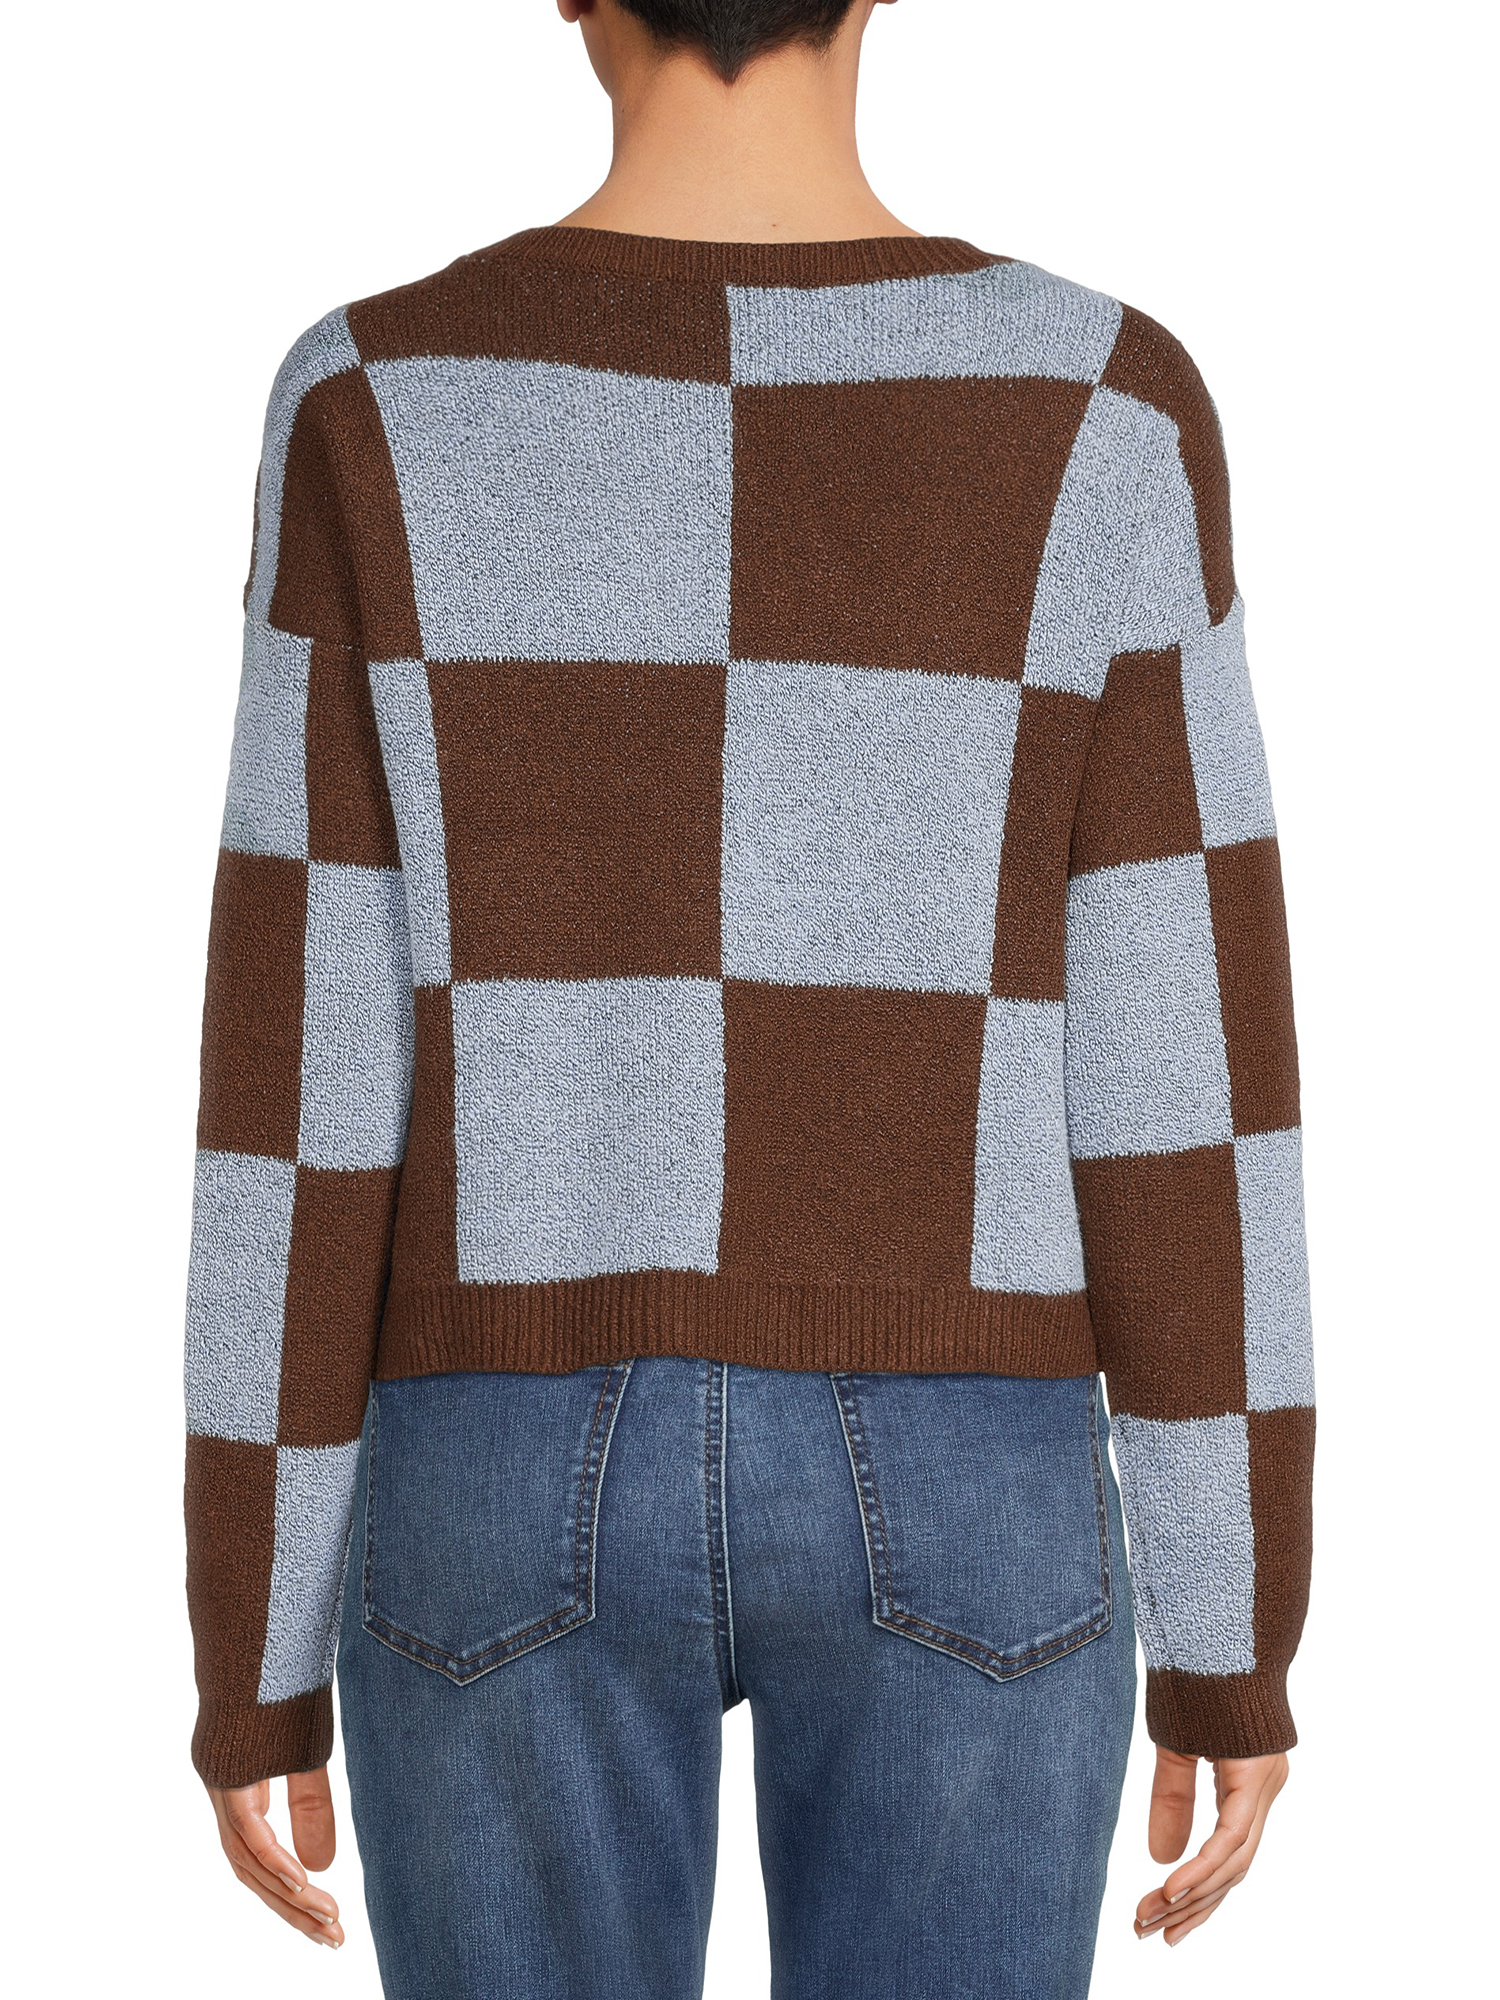 No Boundaries Junior's Jacquard Pullover Sweater - image 3 of 5